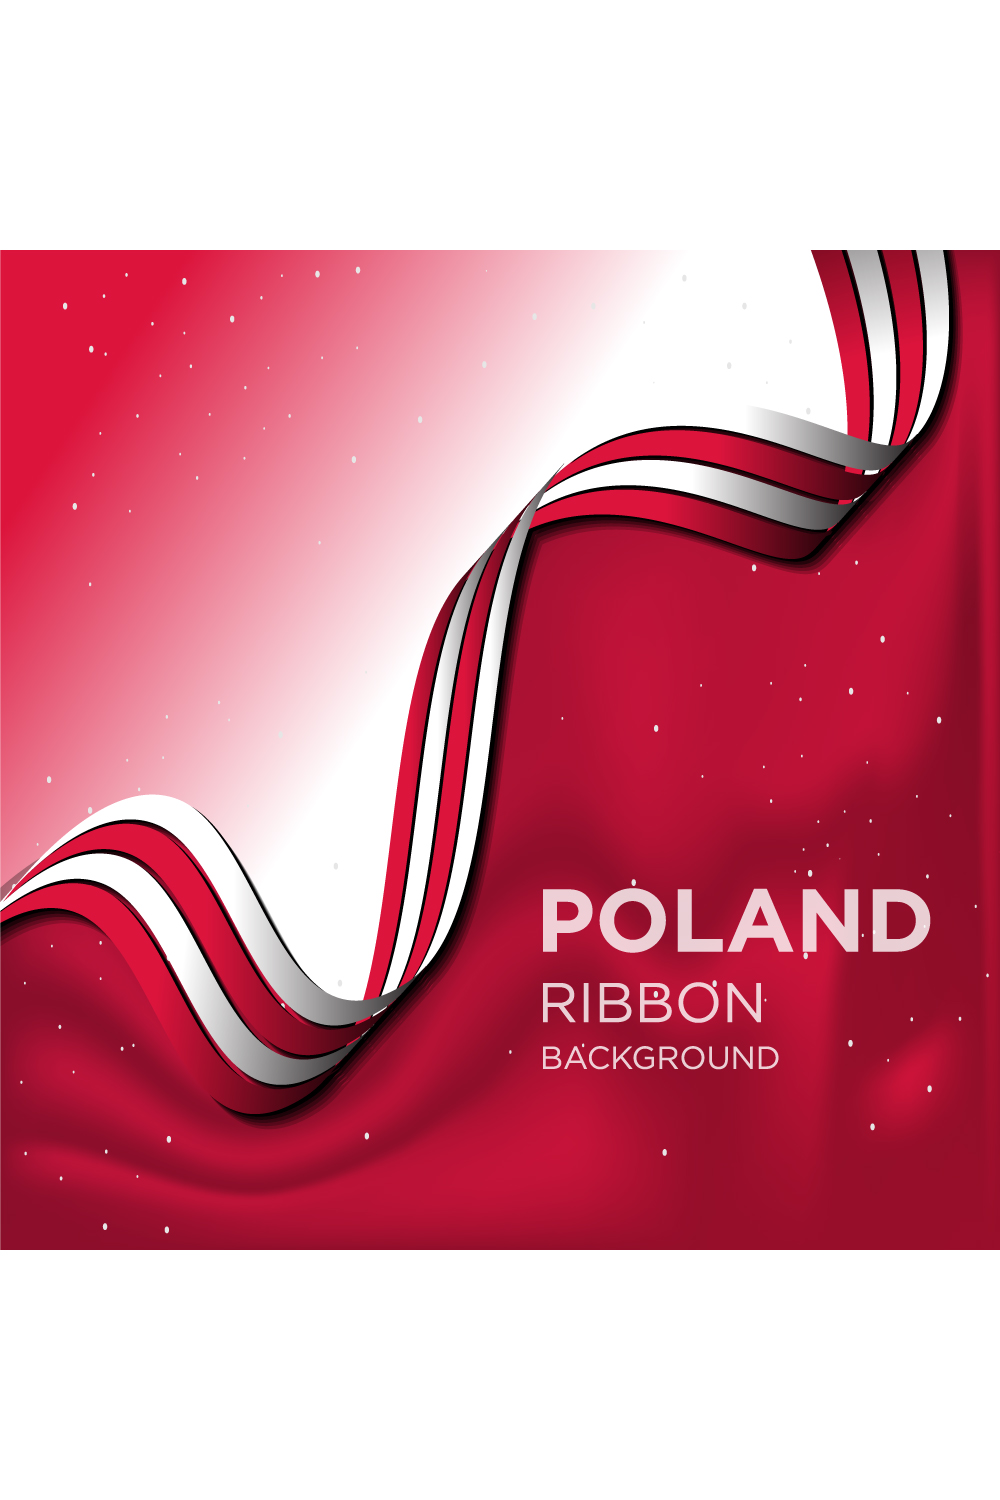 Beautiful image with Polish ribbon.